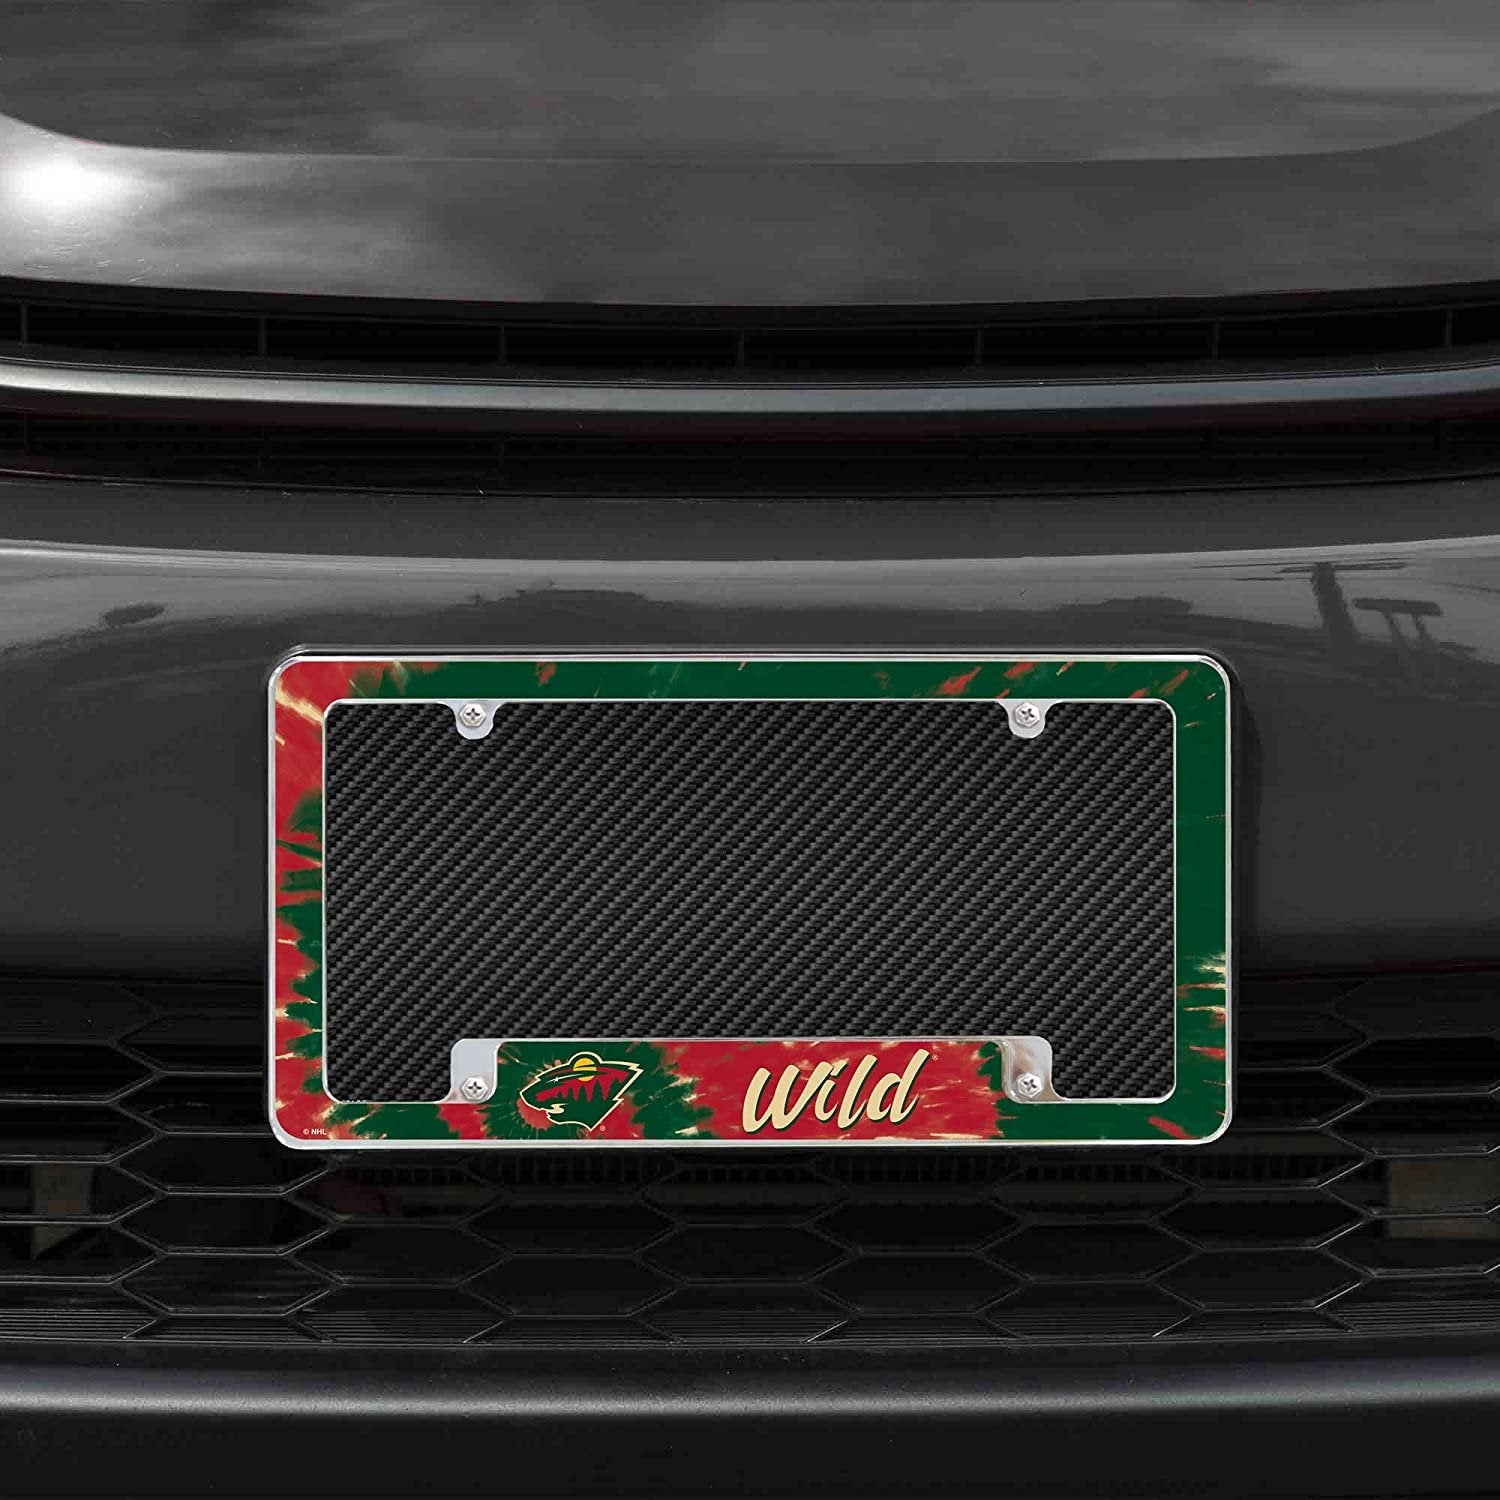 Minnesota Wild Metal License Plate Frame Chrome Tag Cover Tie Dye Design 6x12 Inch